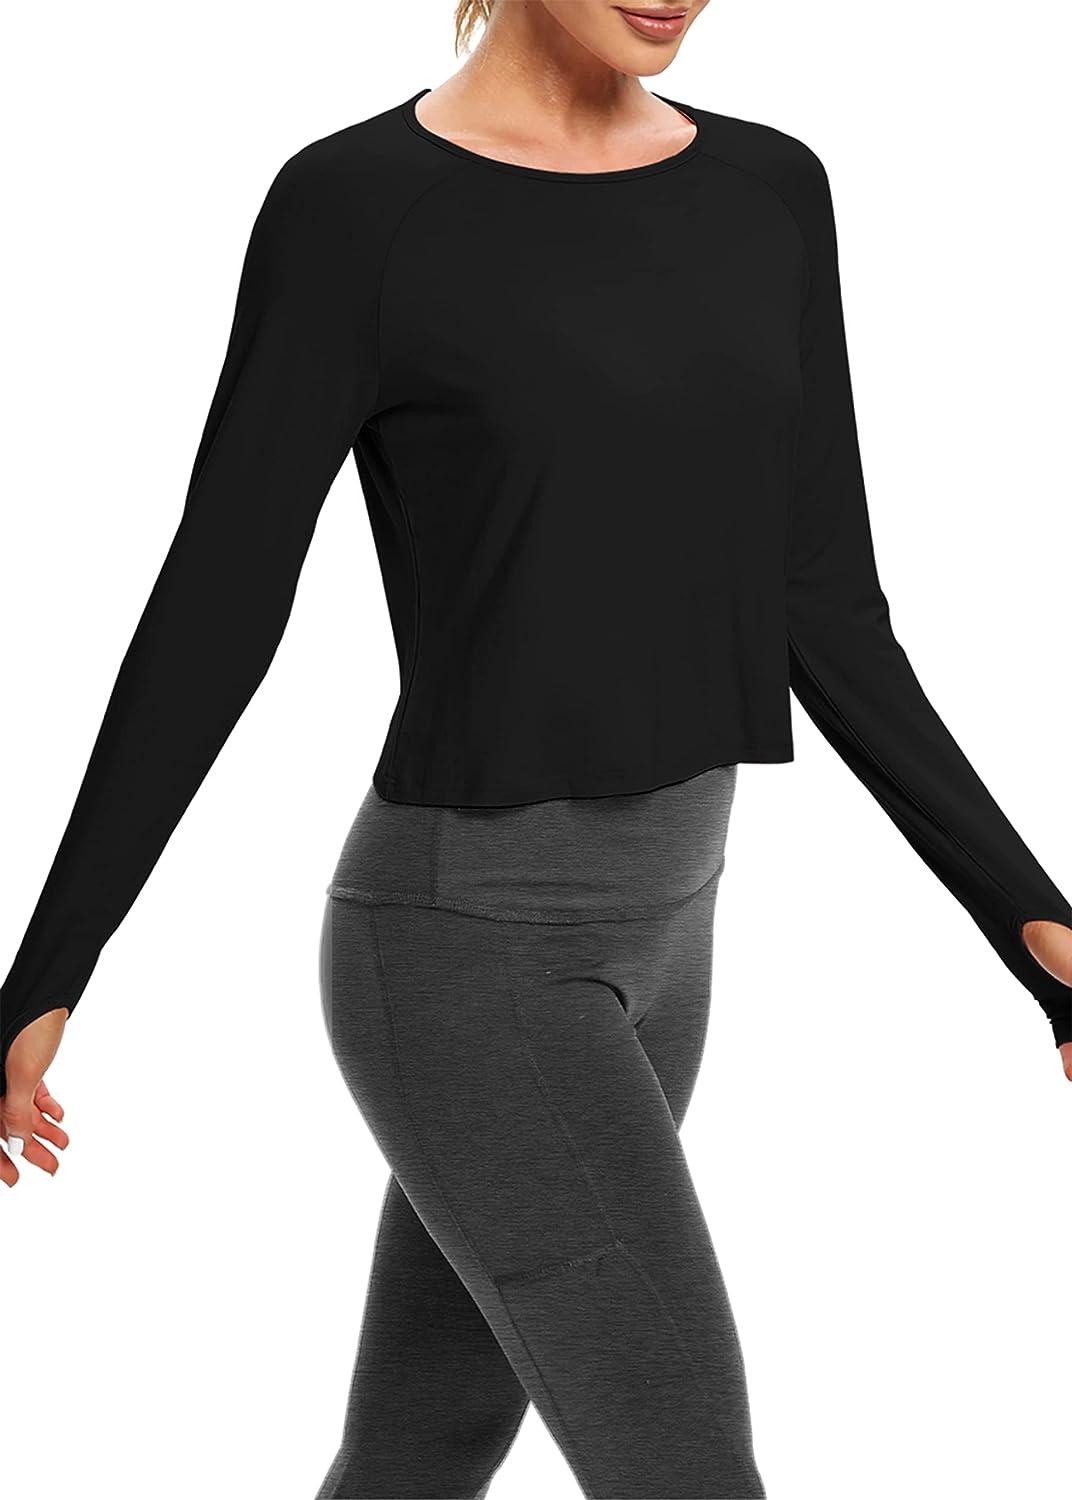 Bestisun Cute Long Sleeve Workout Running Shirts Athletic Yoga Gym Crop Tops  for Women X-Large Black